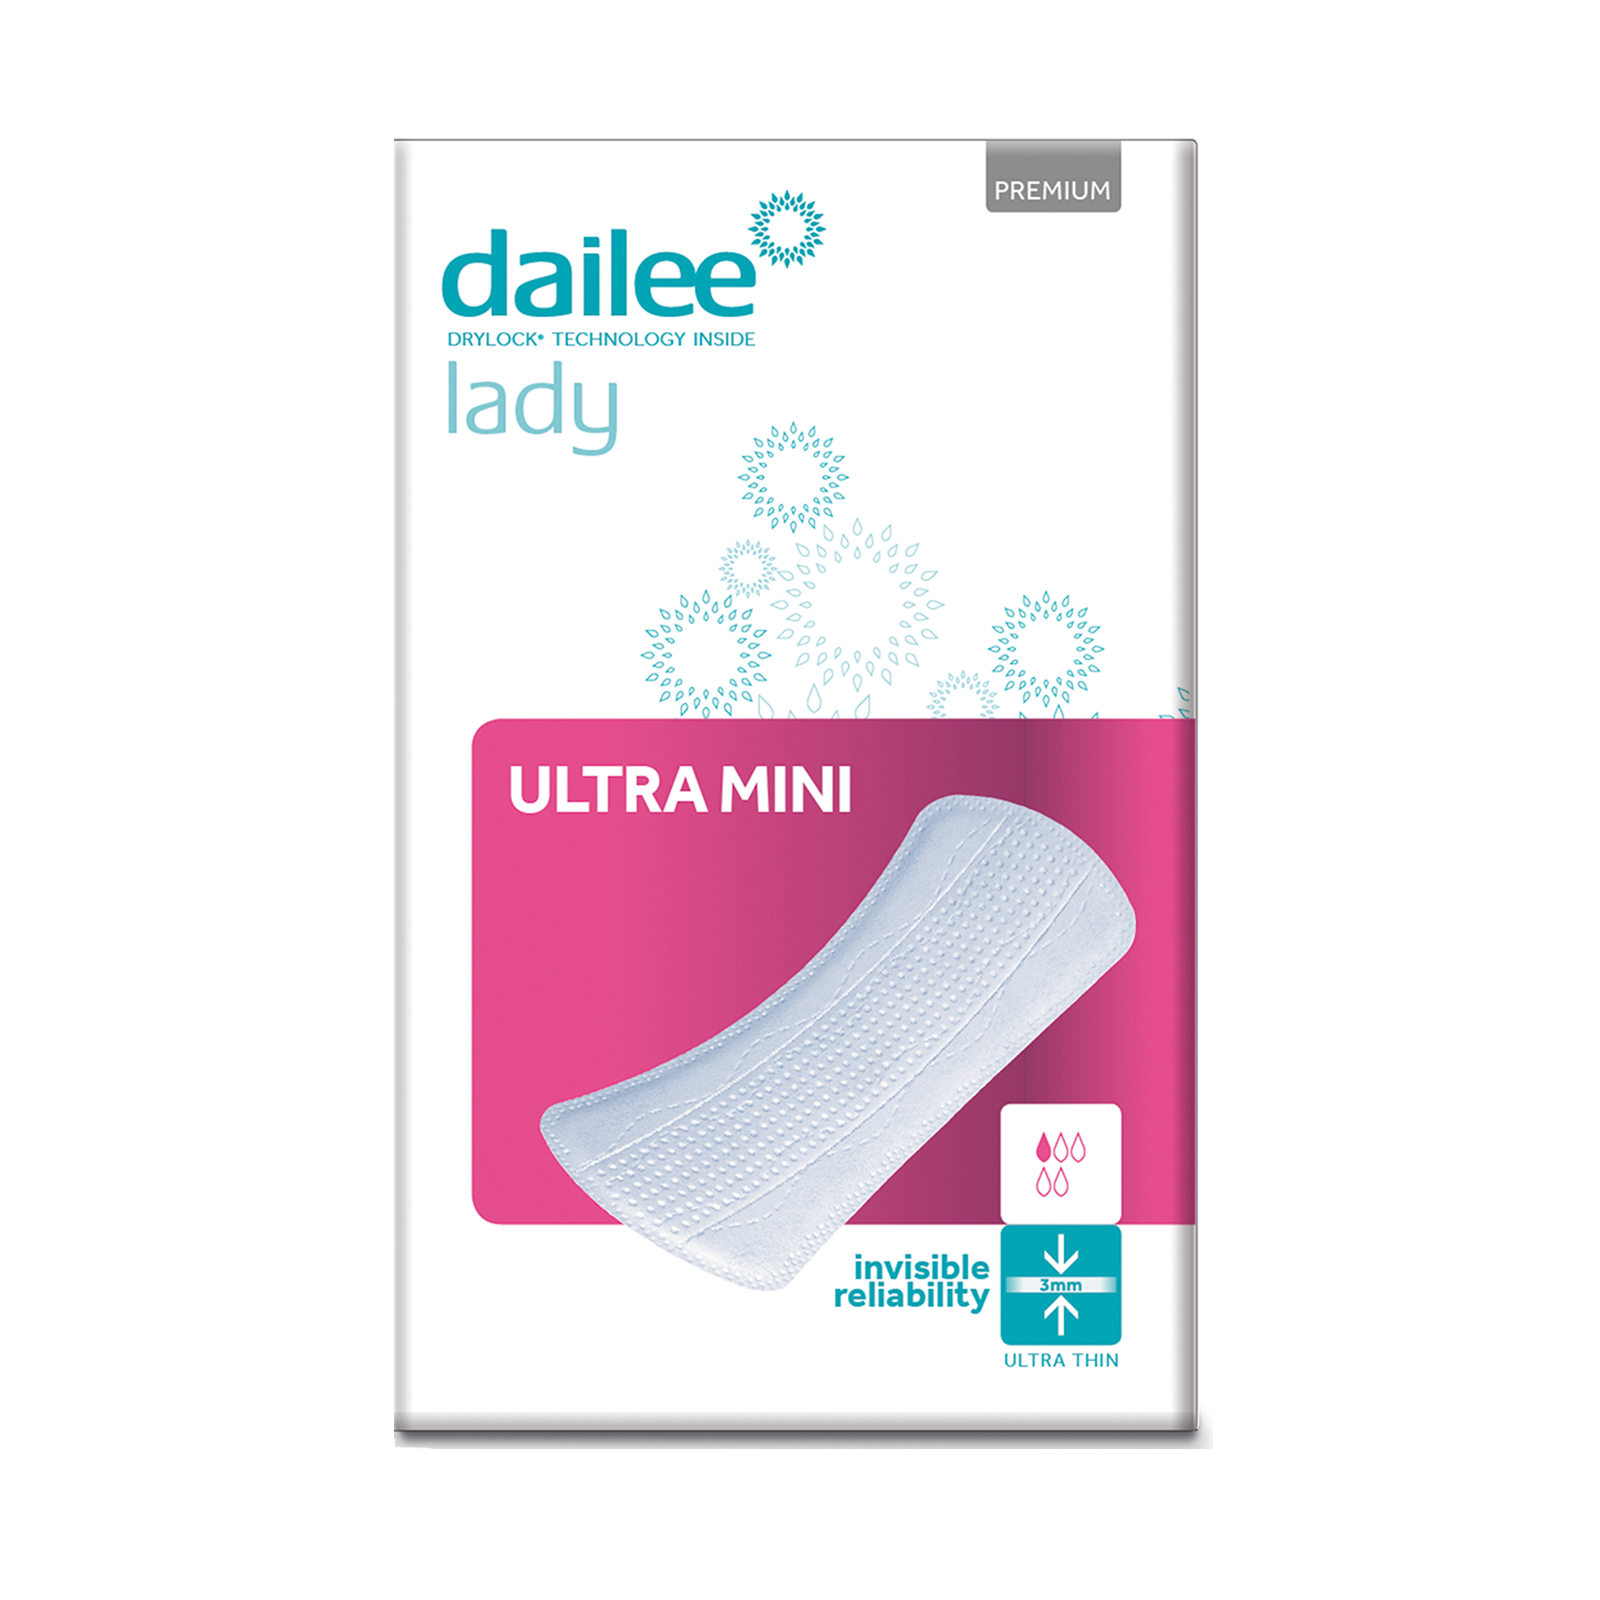 dailee_lady_premium_ultra_mini_thumb